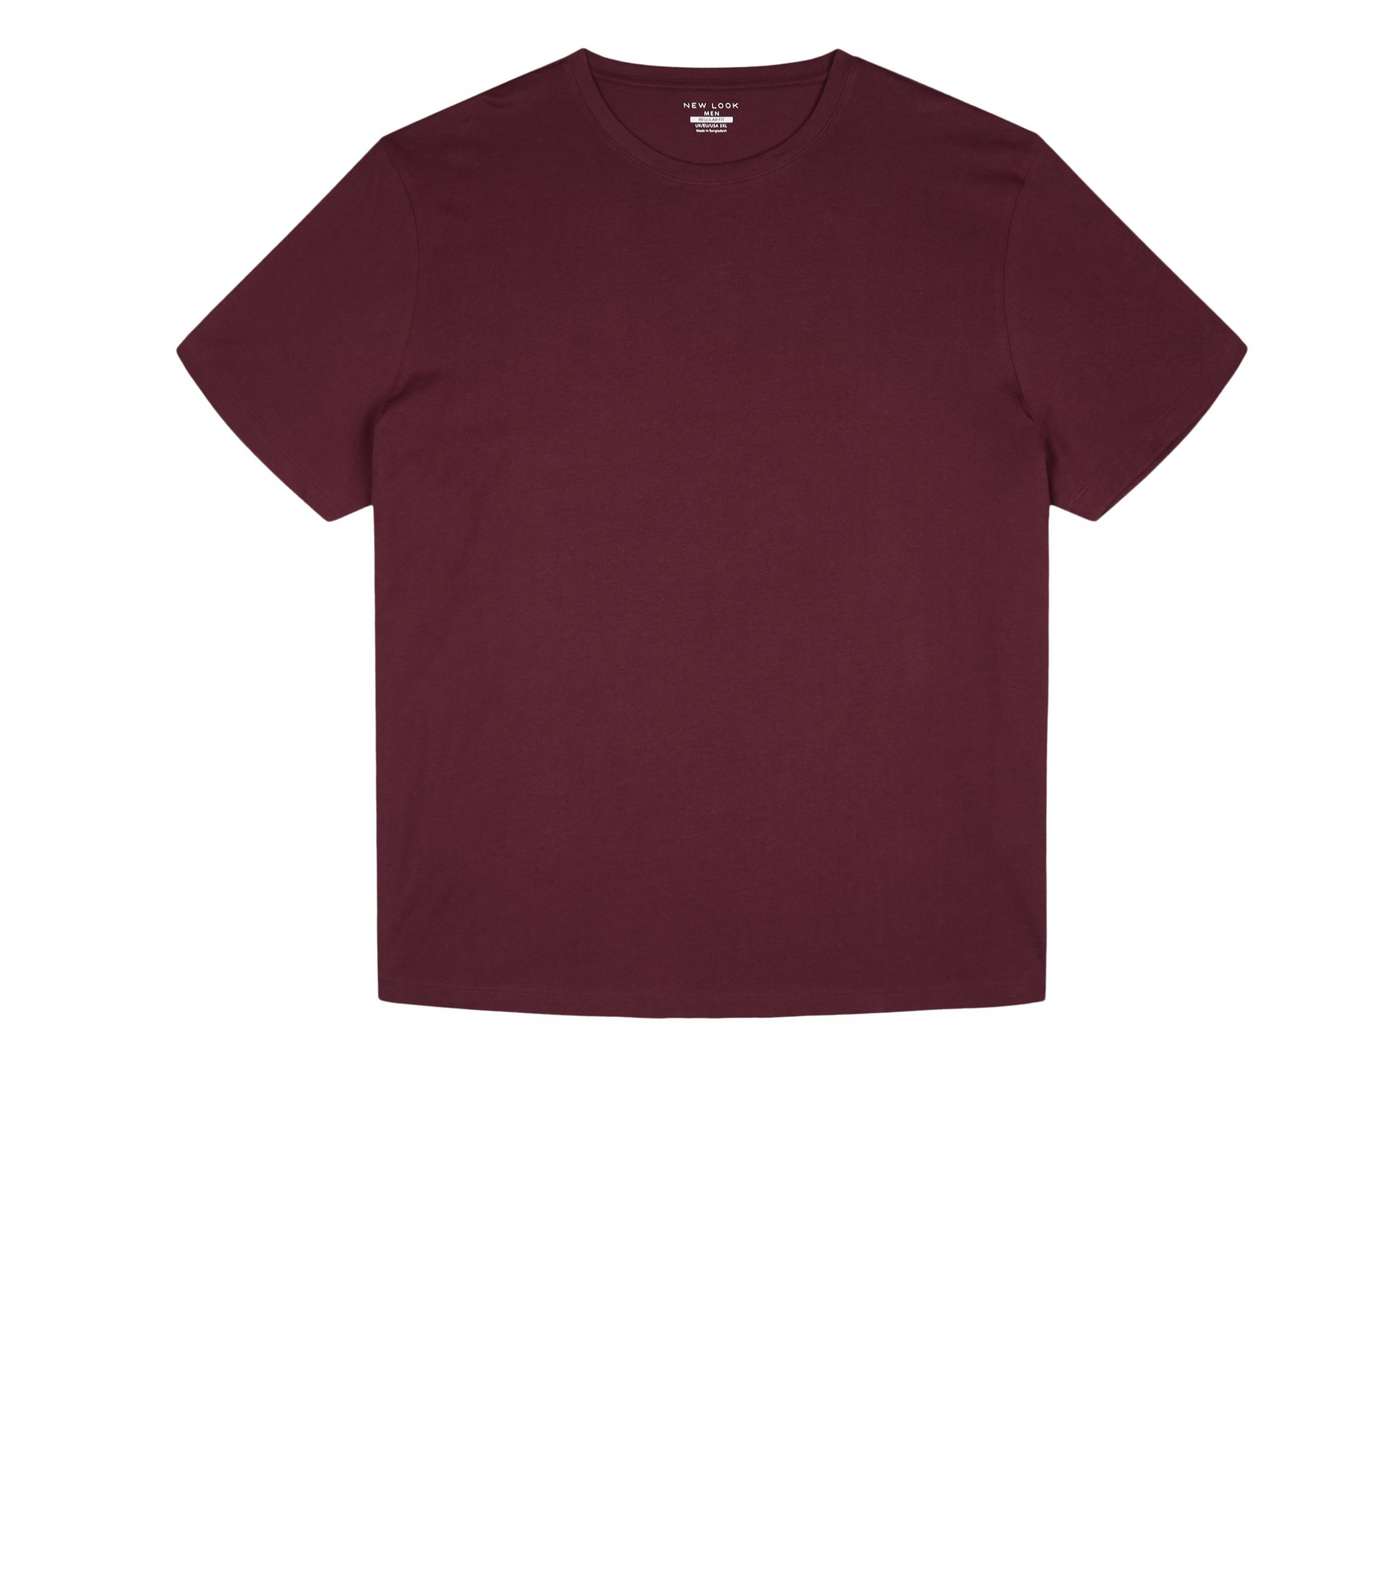 Plus Size Burgundy Crew T-Shirt Image 4